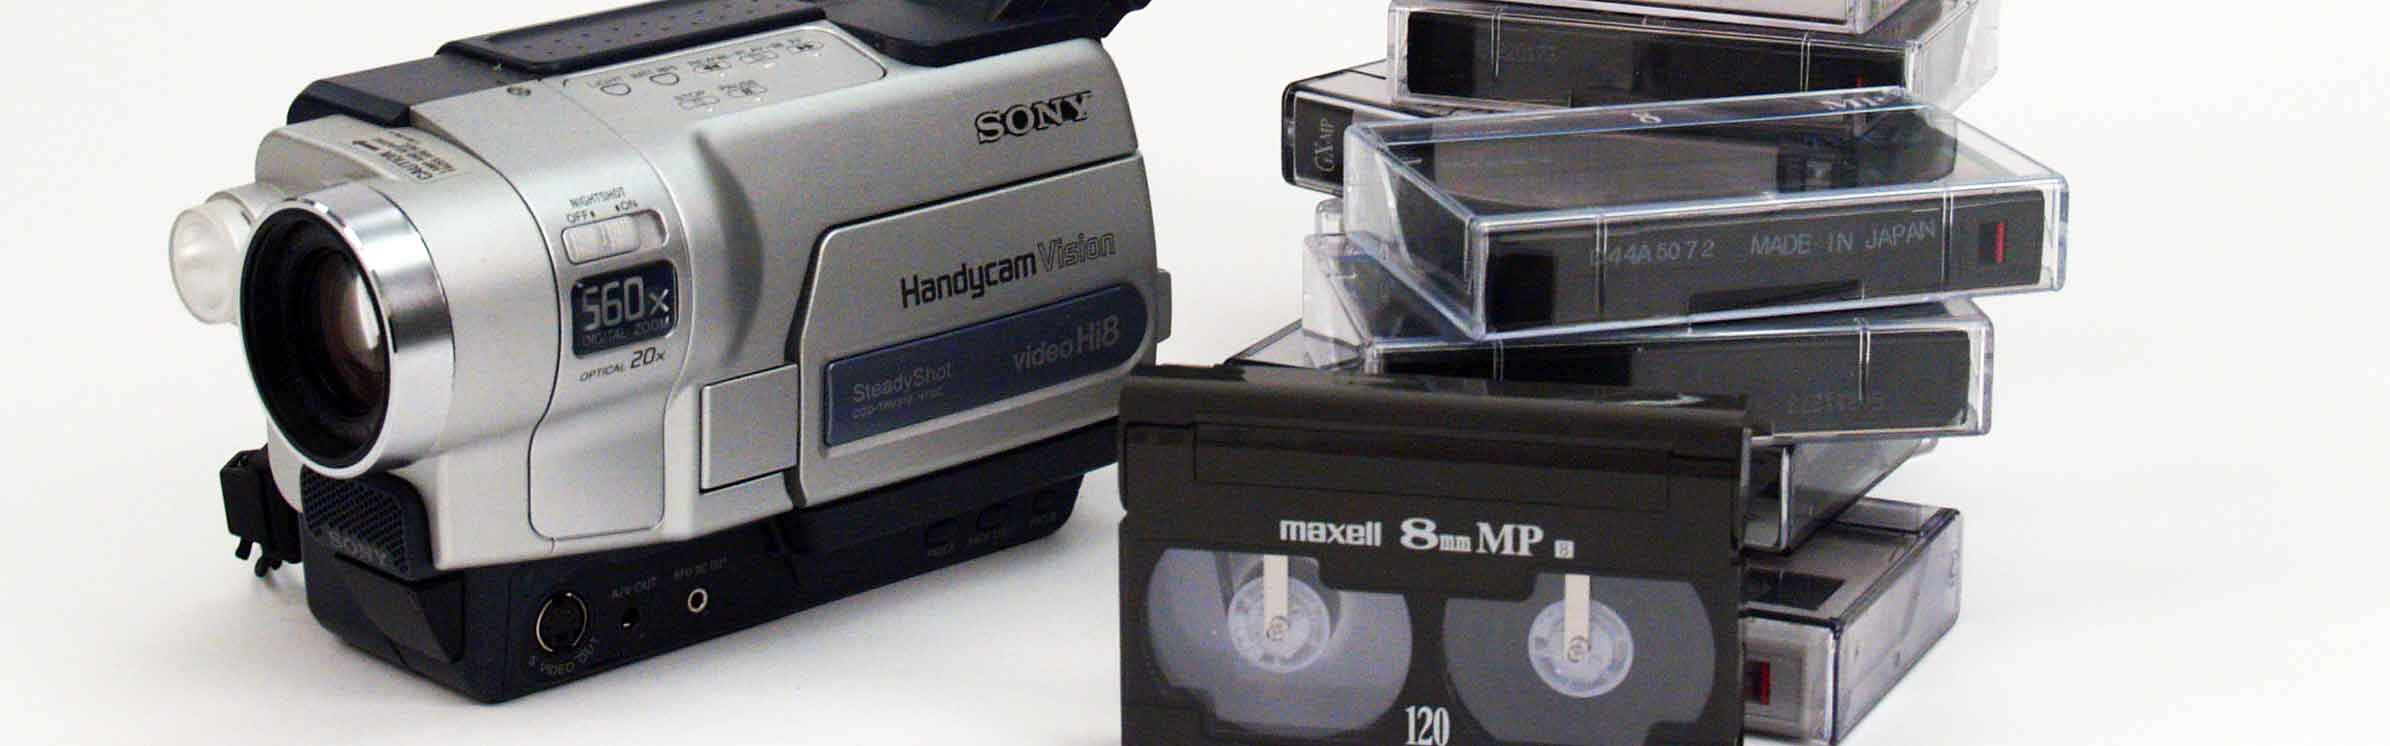 Numériser HI8, 8mm et Digital8, hi8-video8-digital8